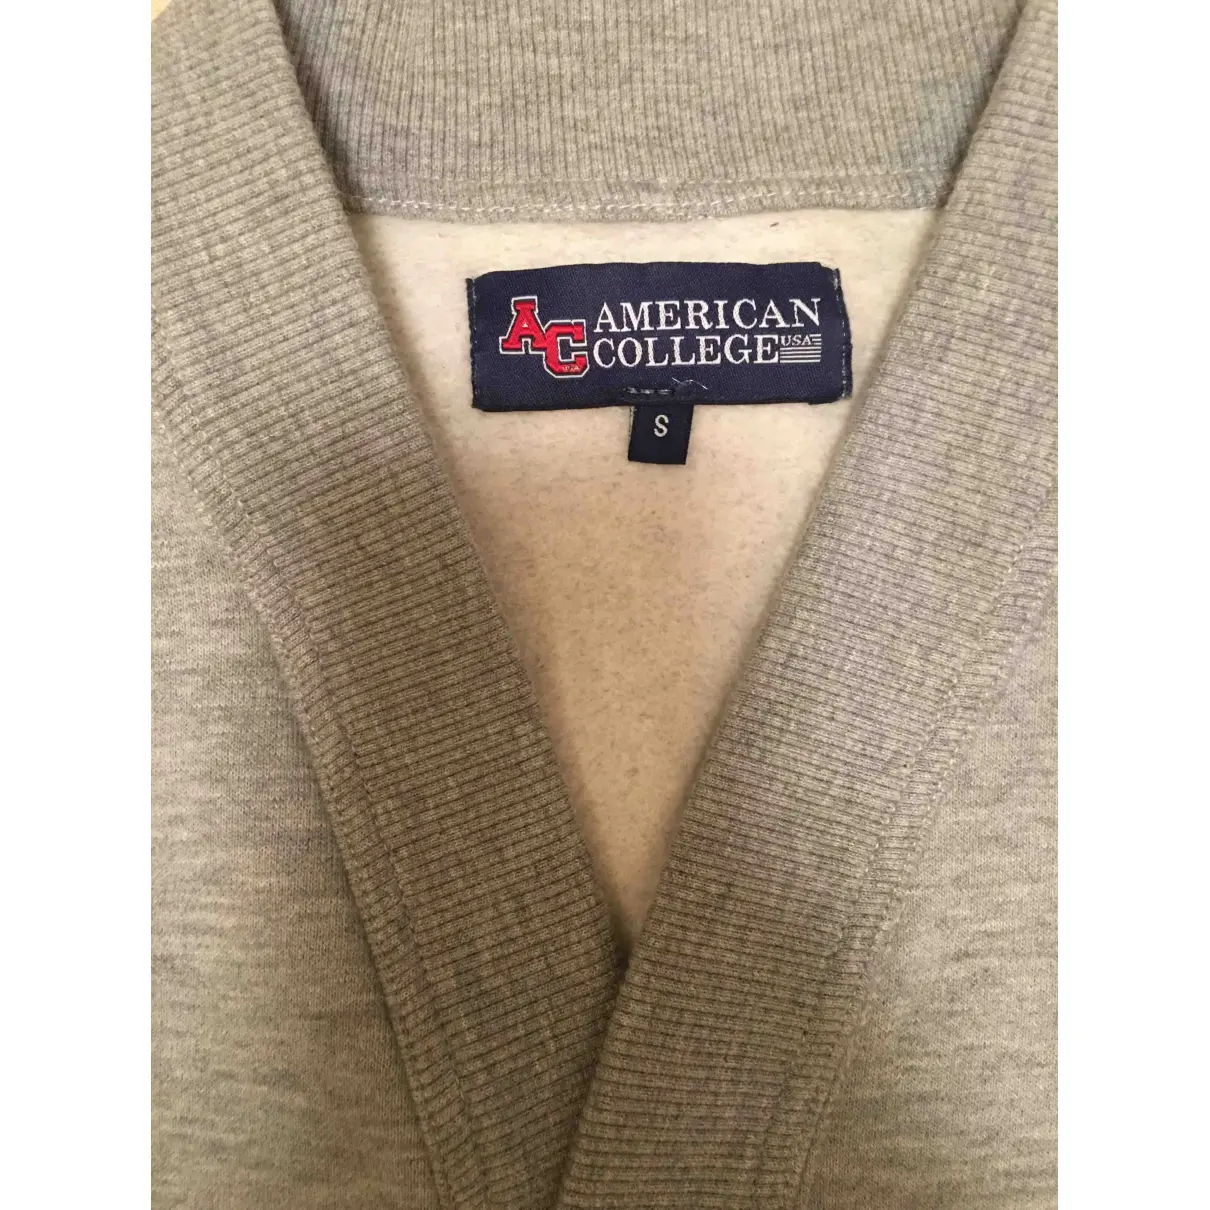 Buy American College Jacket online